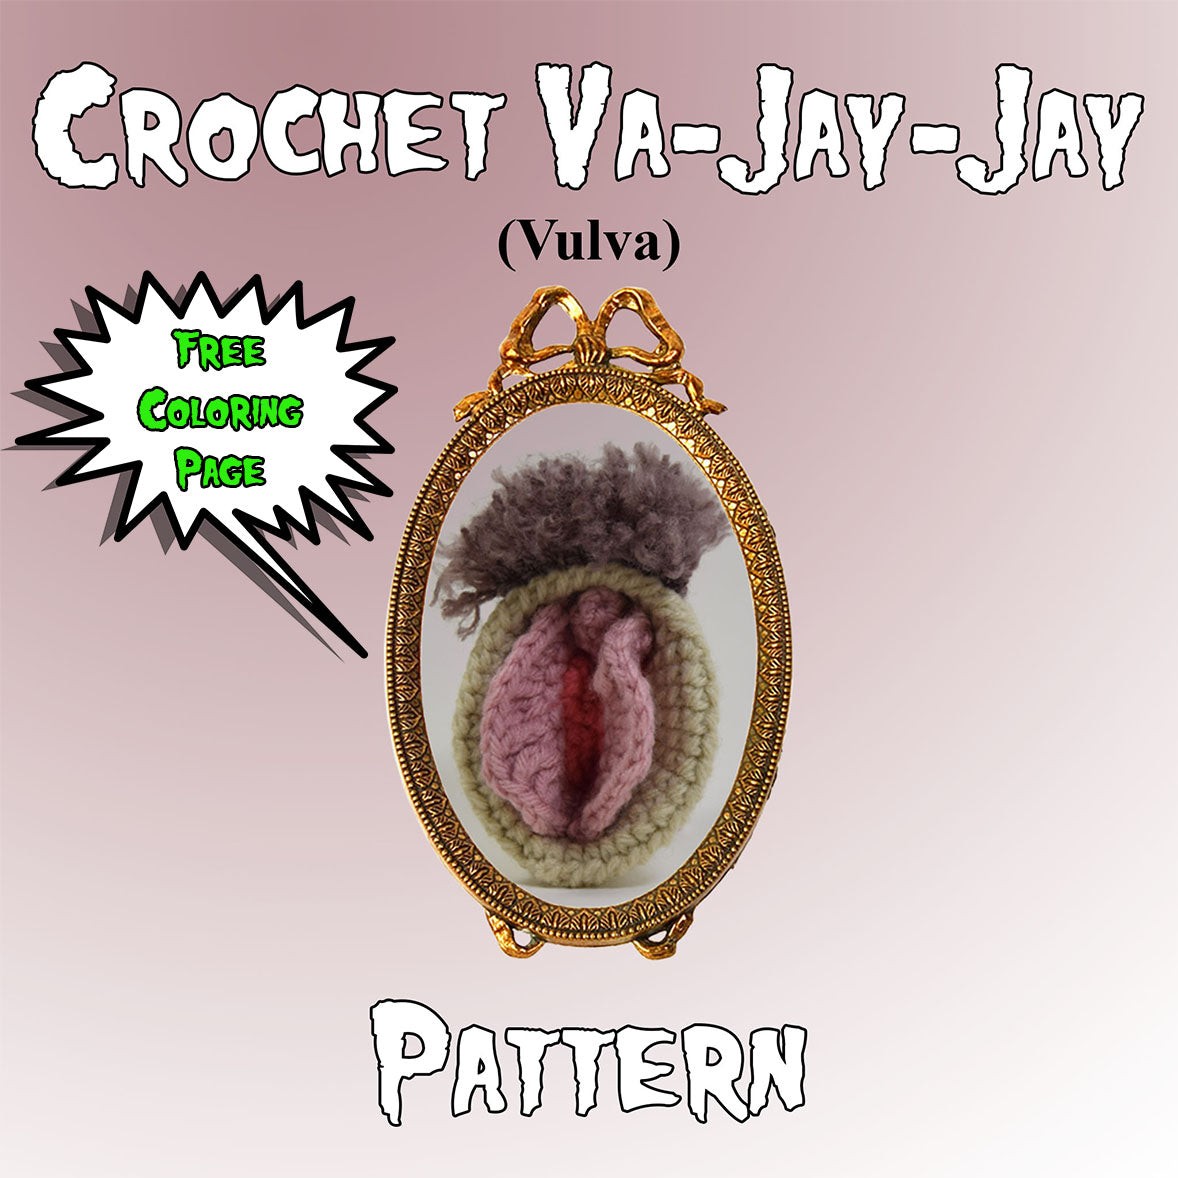 crochet va jay jay (vulva) pattern with coloring page